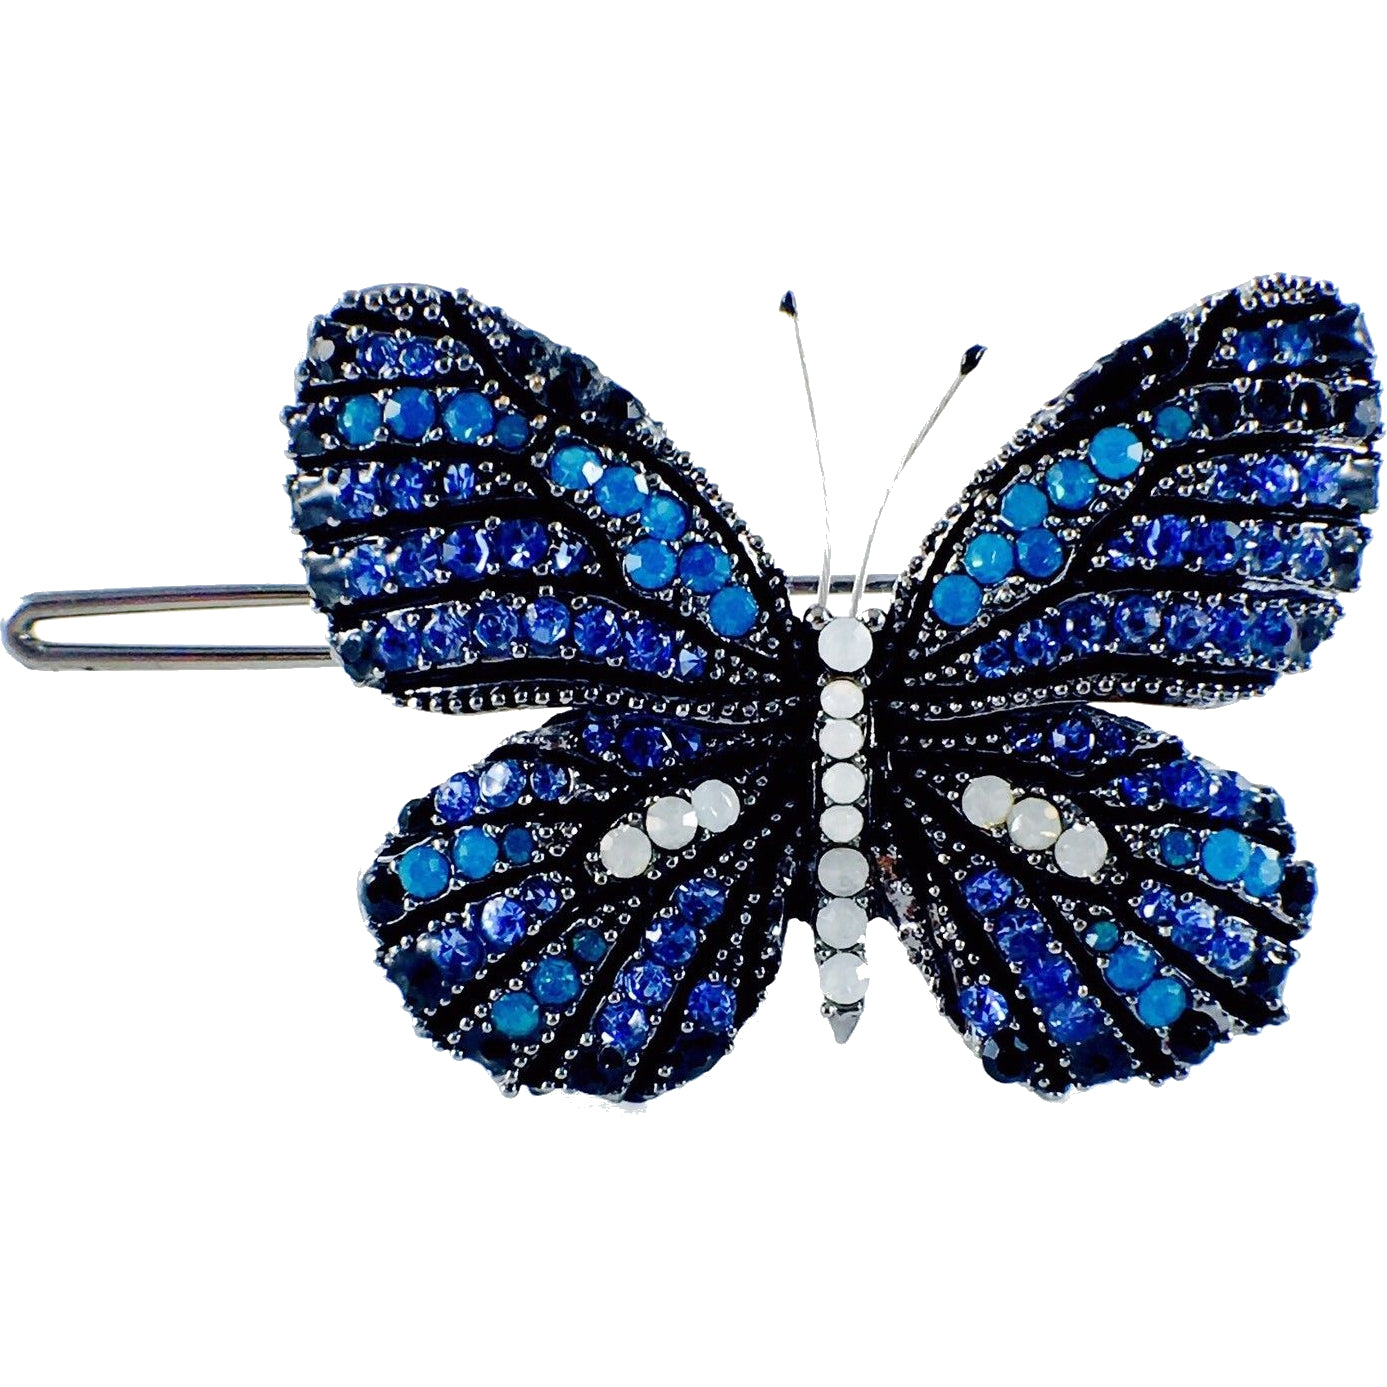 Fairy Butterfly Hair Clip use Swarovski Crystal metallic black base multi colors Blue Sapphire White Black, Hair Clip - MOGHANT